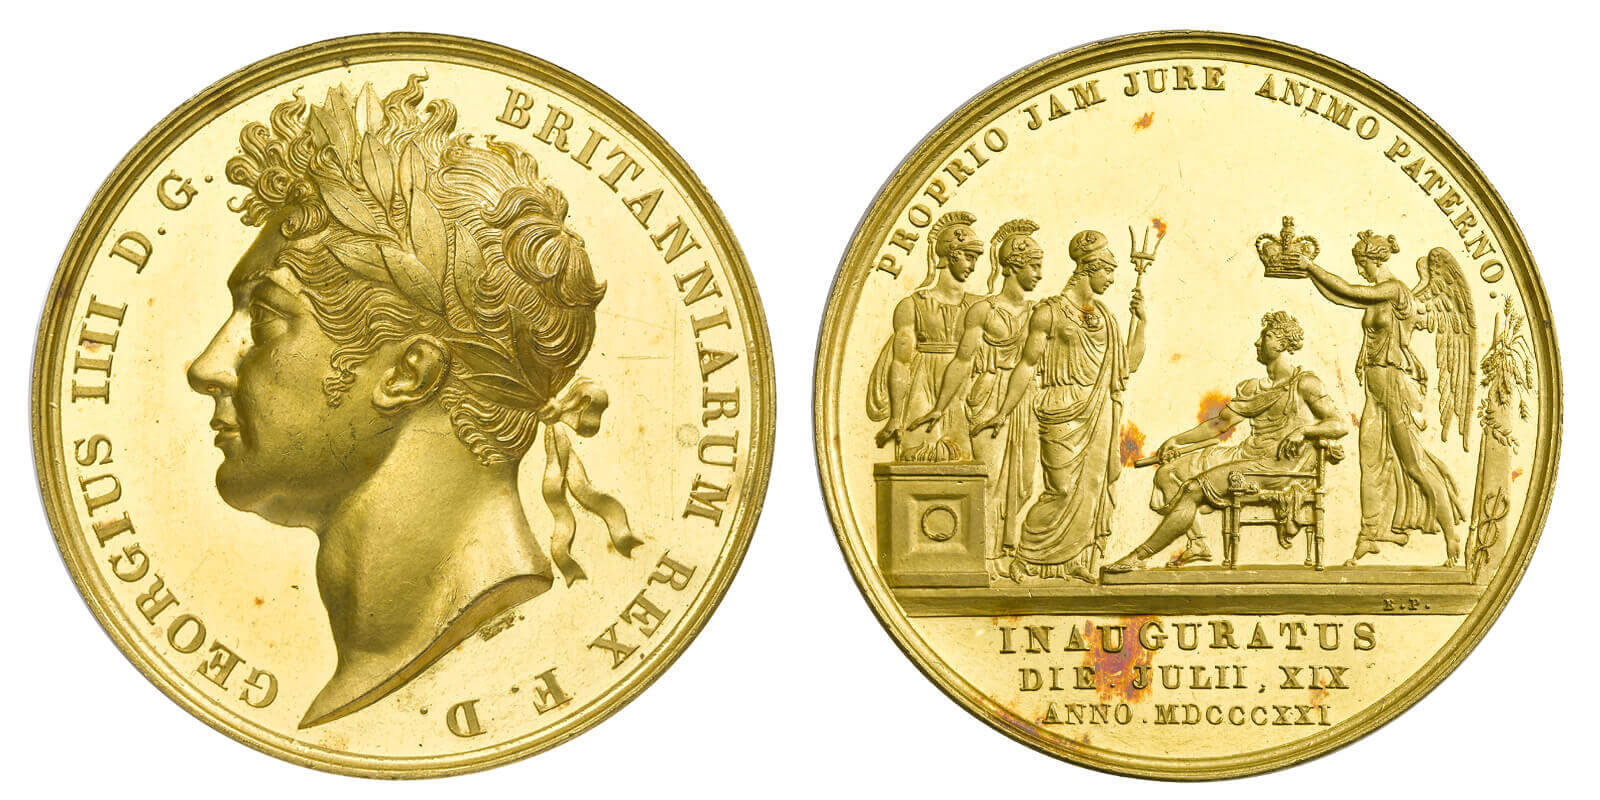 George III coronation medal copy.jpg